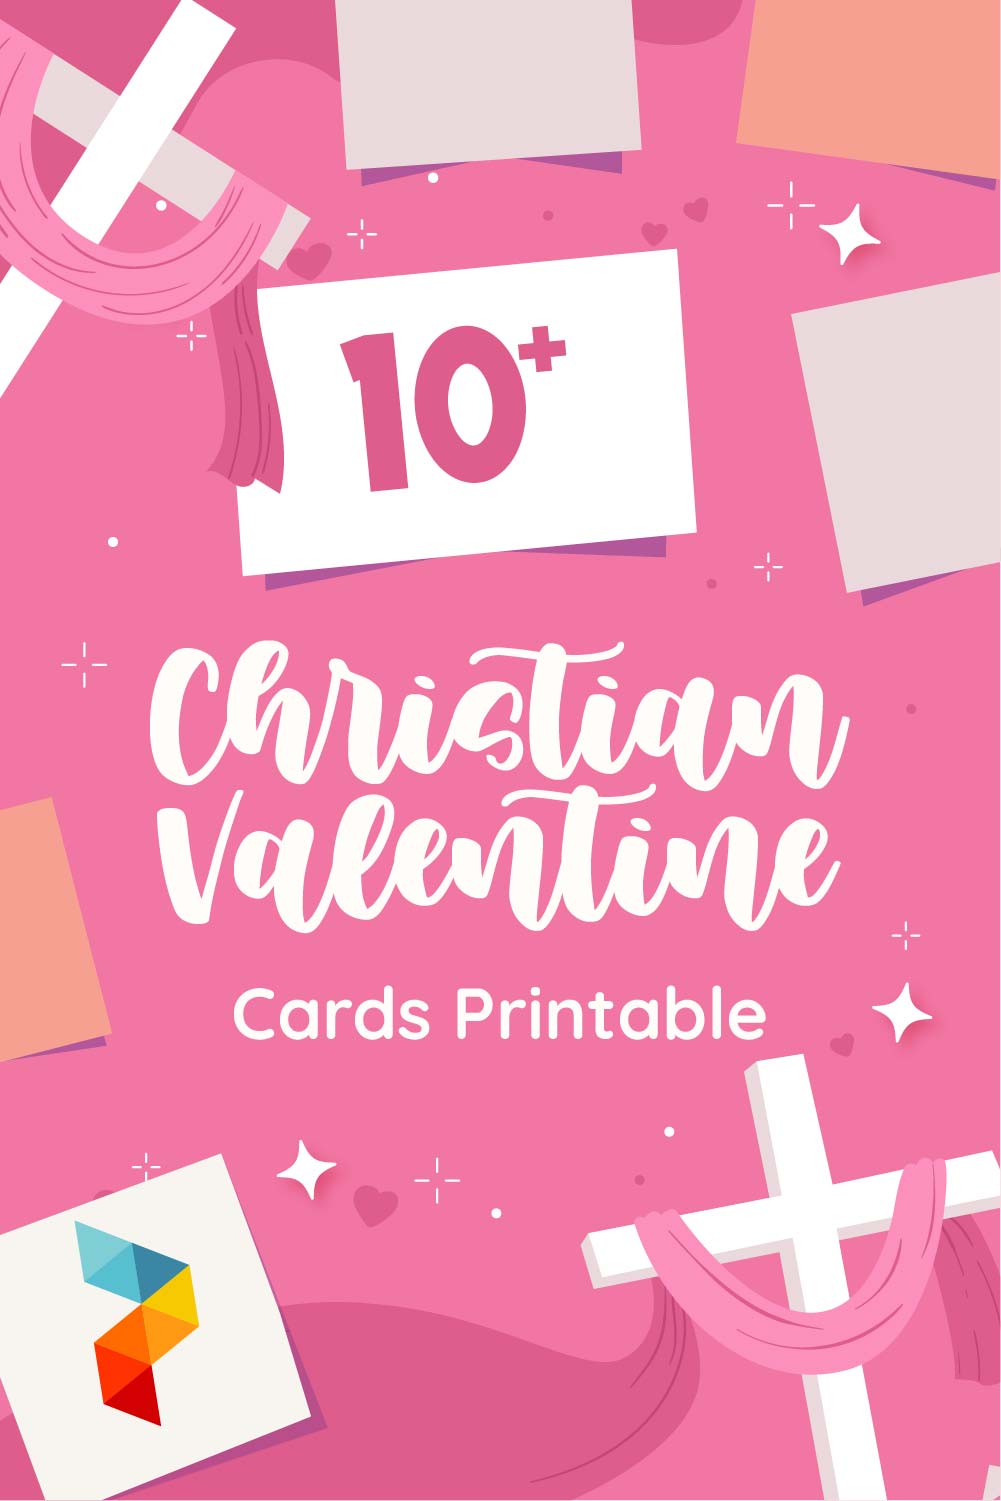 Christian Valentine Cards Printable